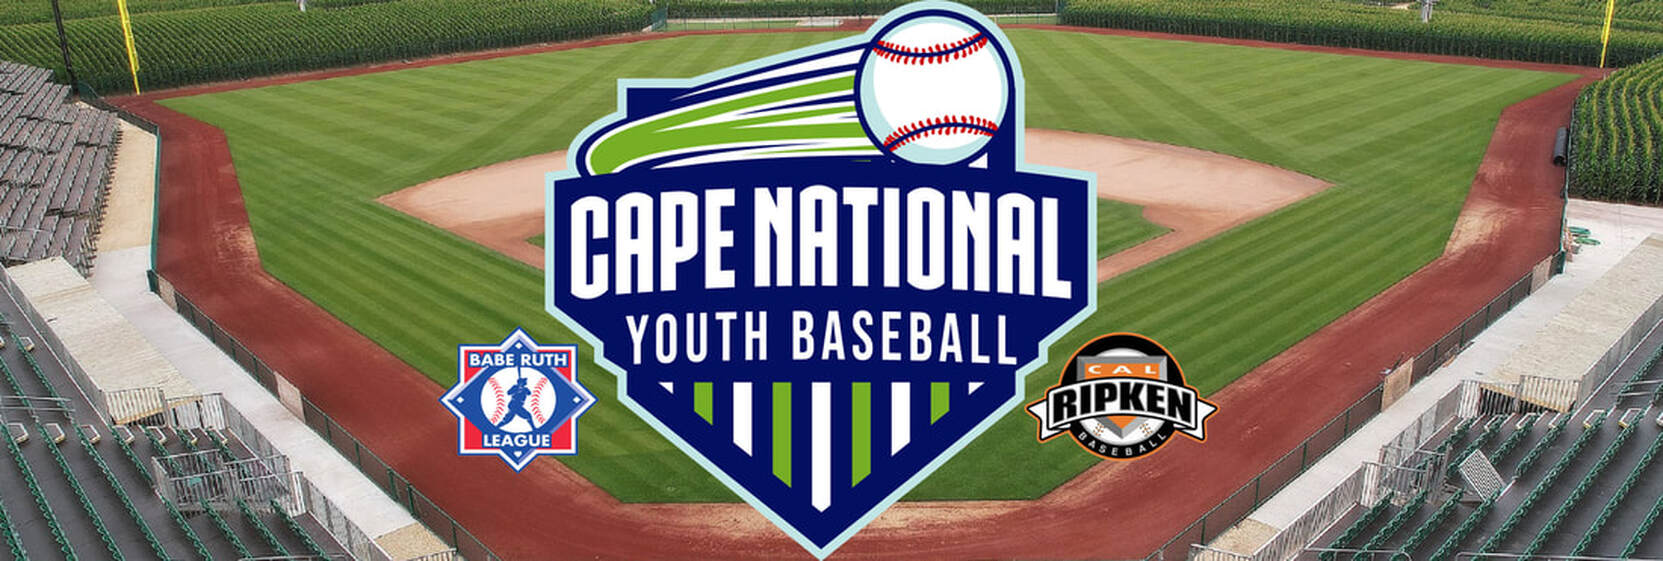 Cape National Youth Baseball